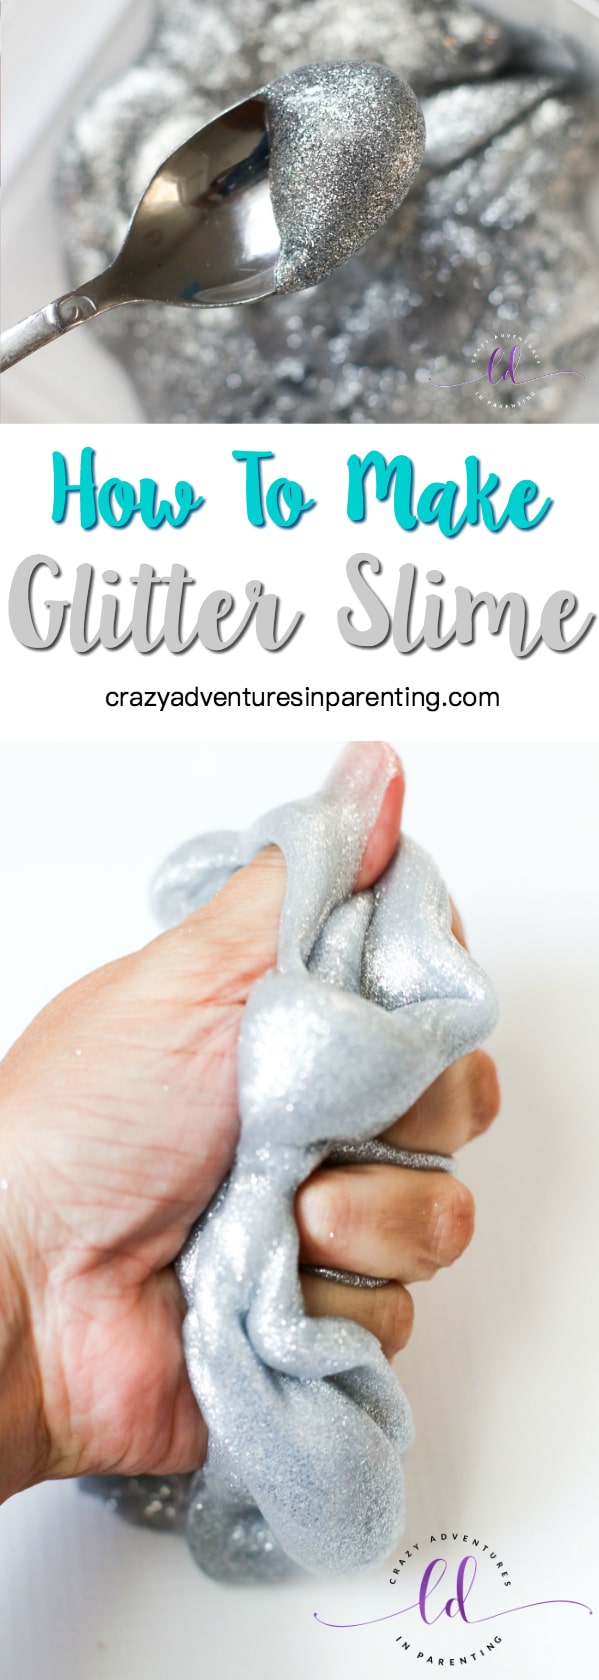 How to Make Glitter Slime